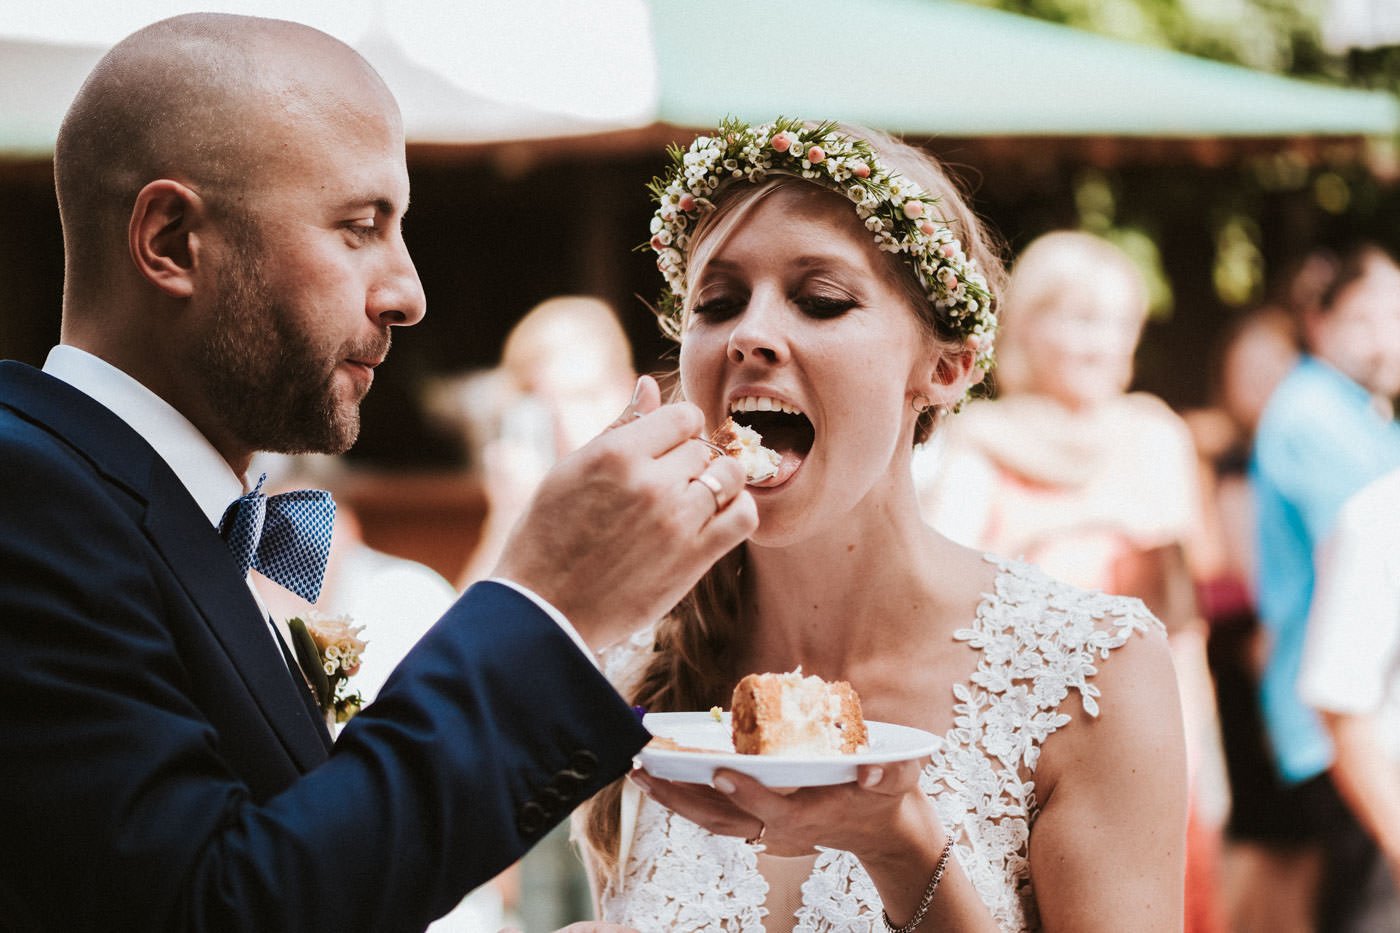 Groom feeds bride with wedding cake